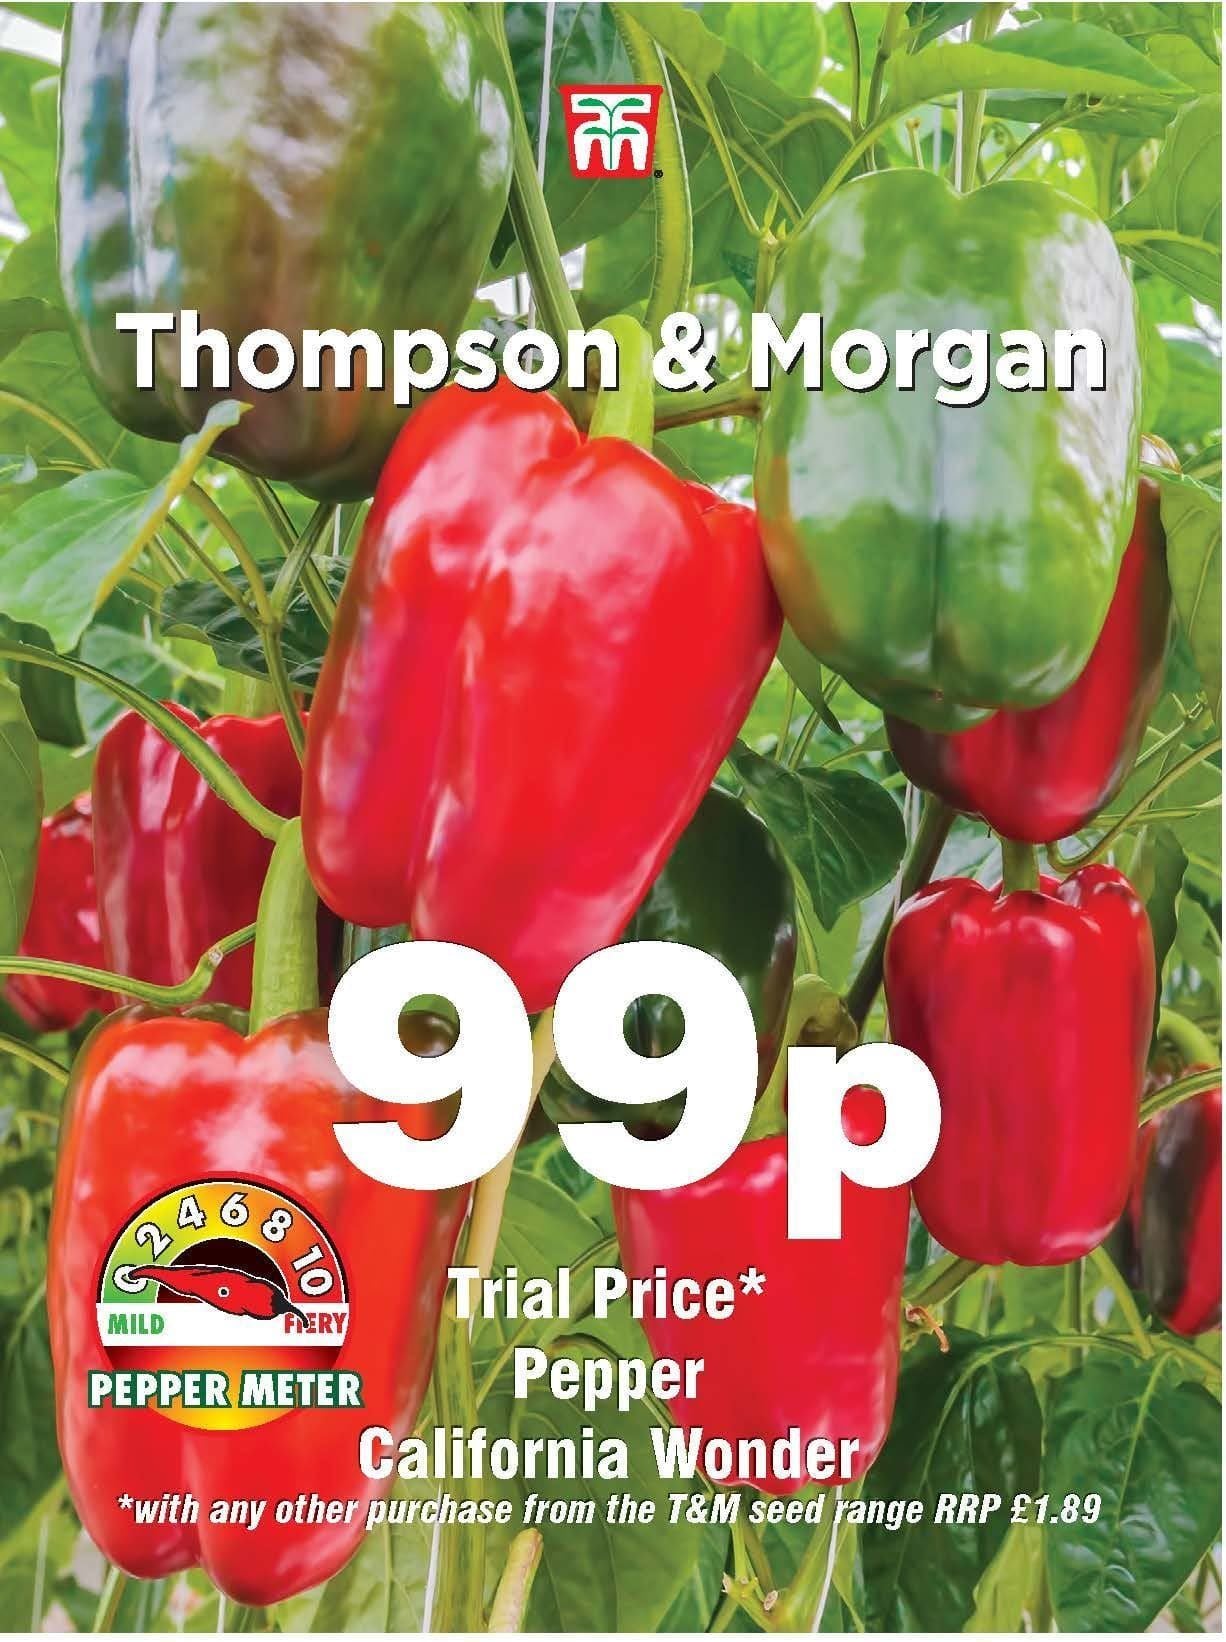 Thompson & Morgan Pepper California Wonder 40 Seed Only 99p